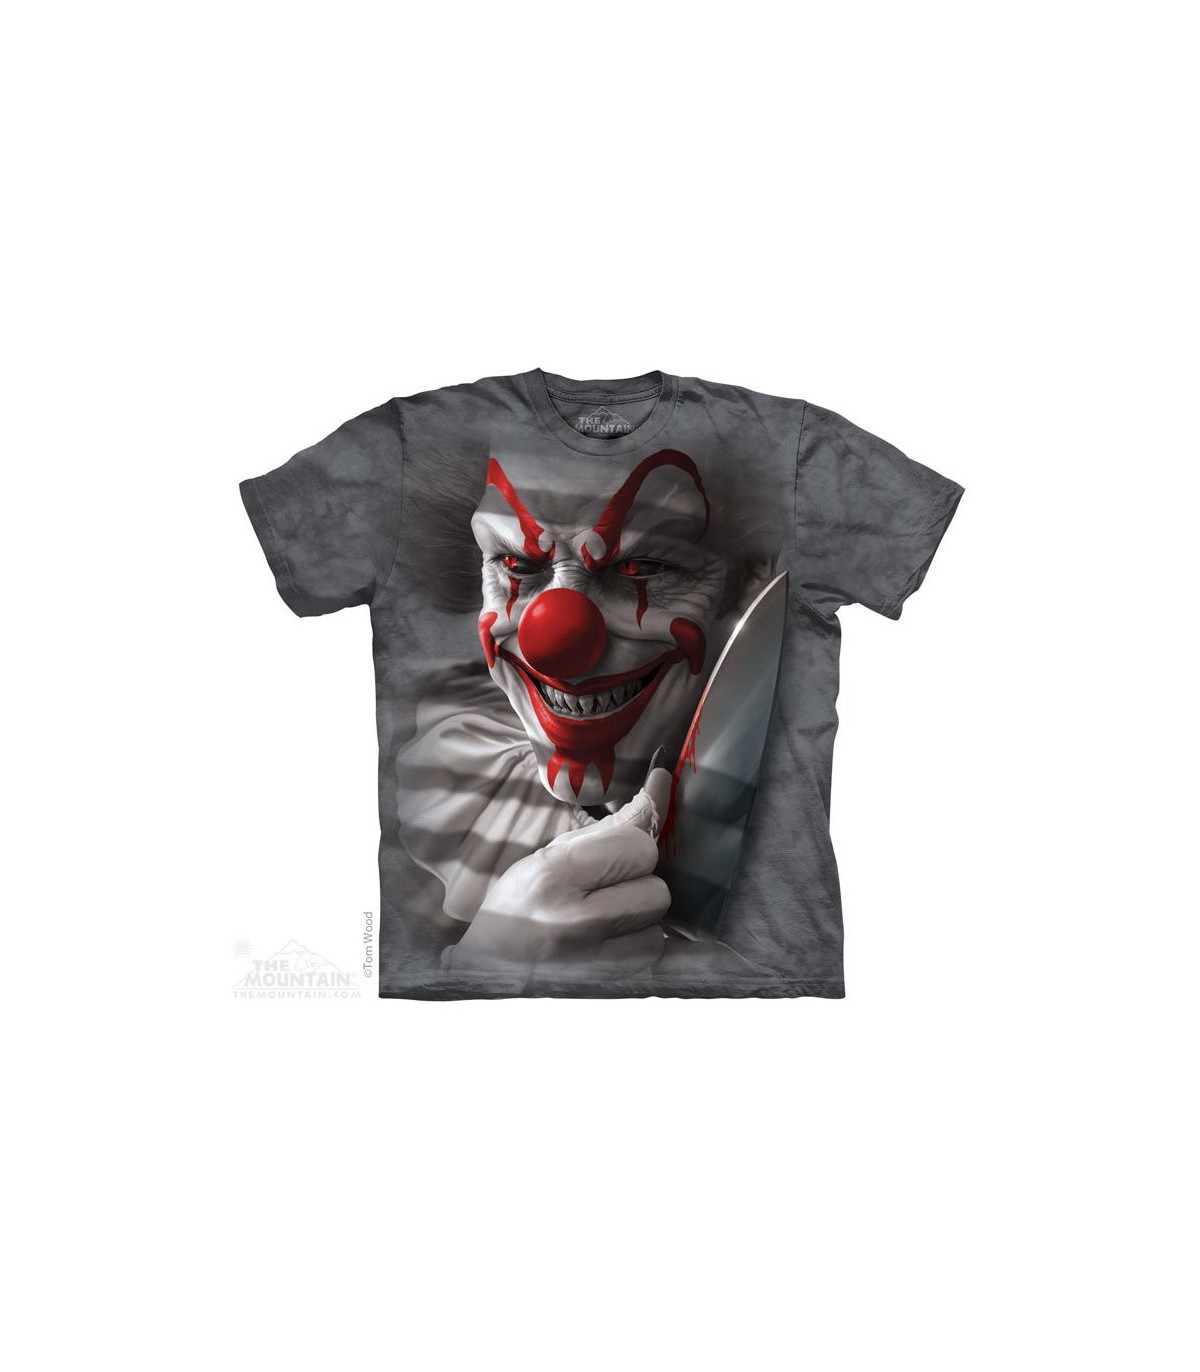 #1 Effrayant Clown Horreur Face virer Réutilisable Stencil Halloween T-shirt peinture